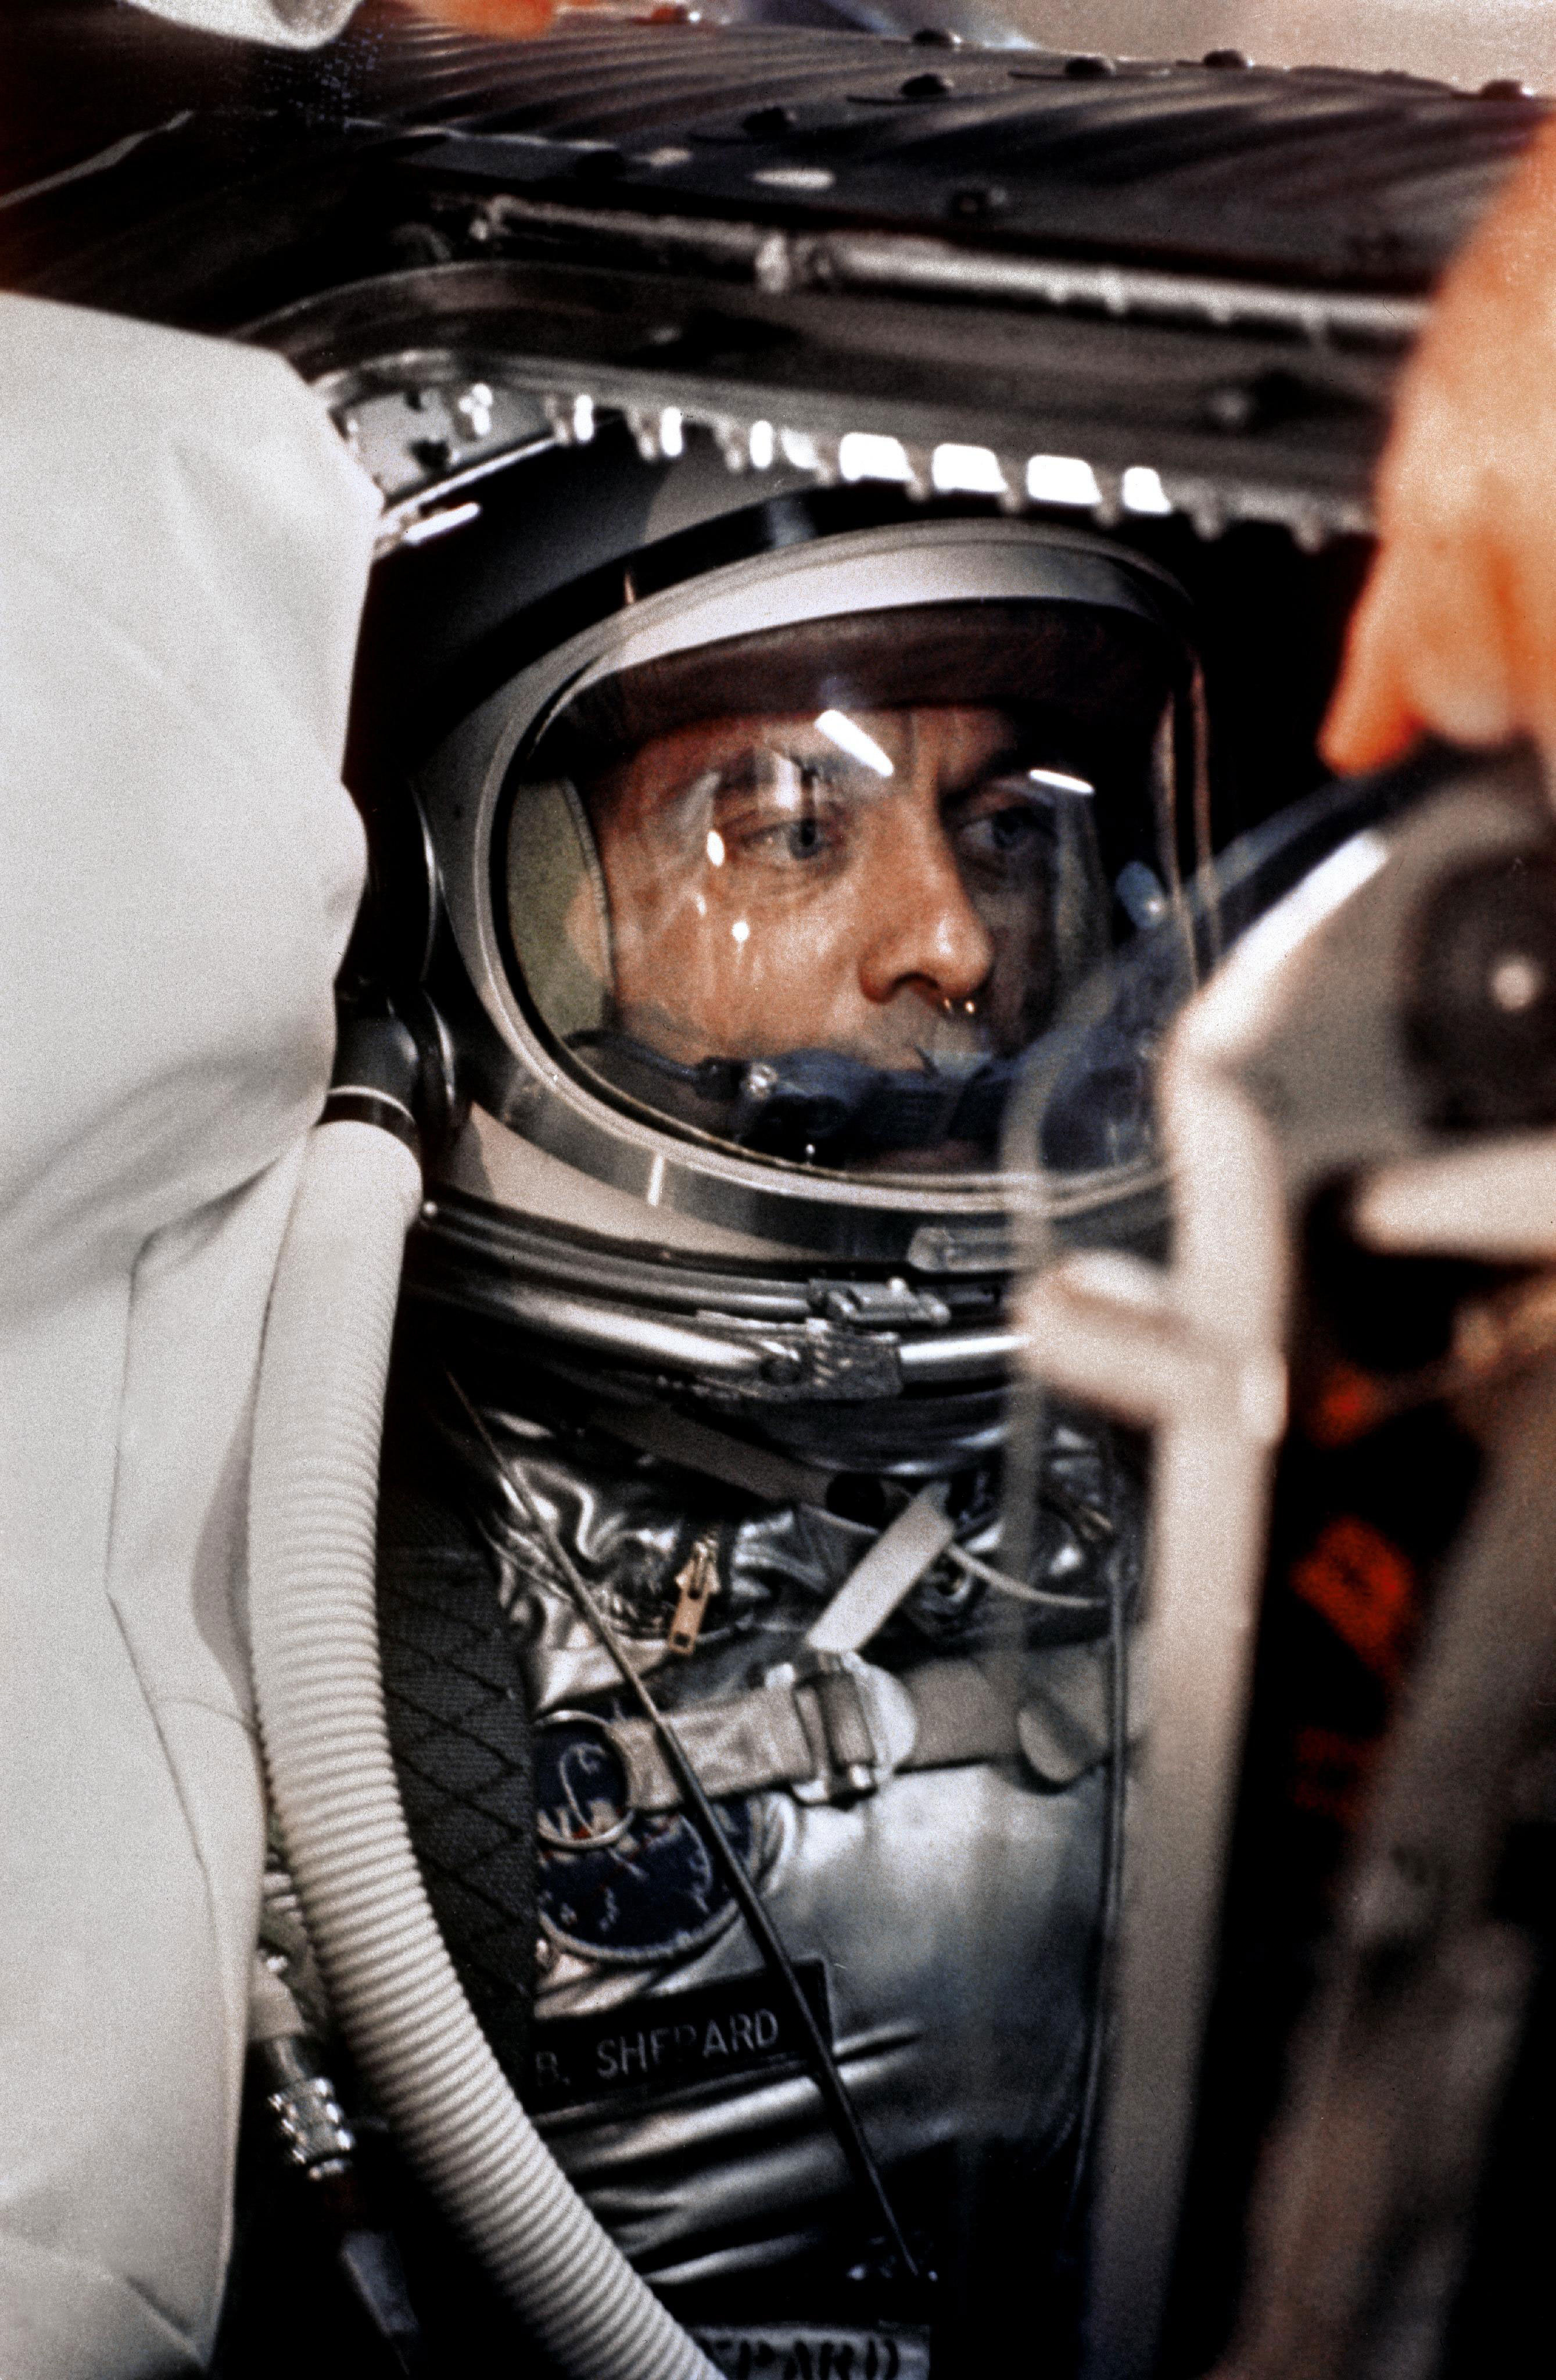 Alan Shepard in his space suit seated inside the Mercur y capsule. Credit: NASA/Bill Taub